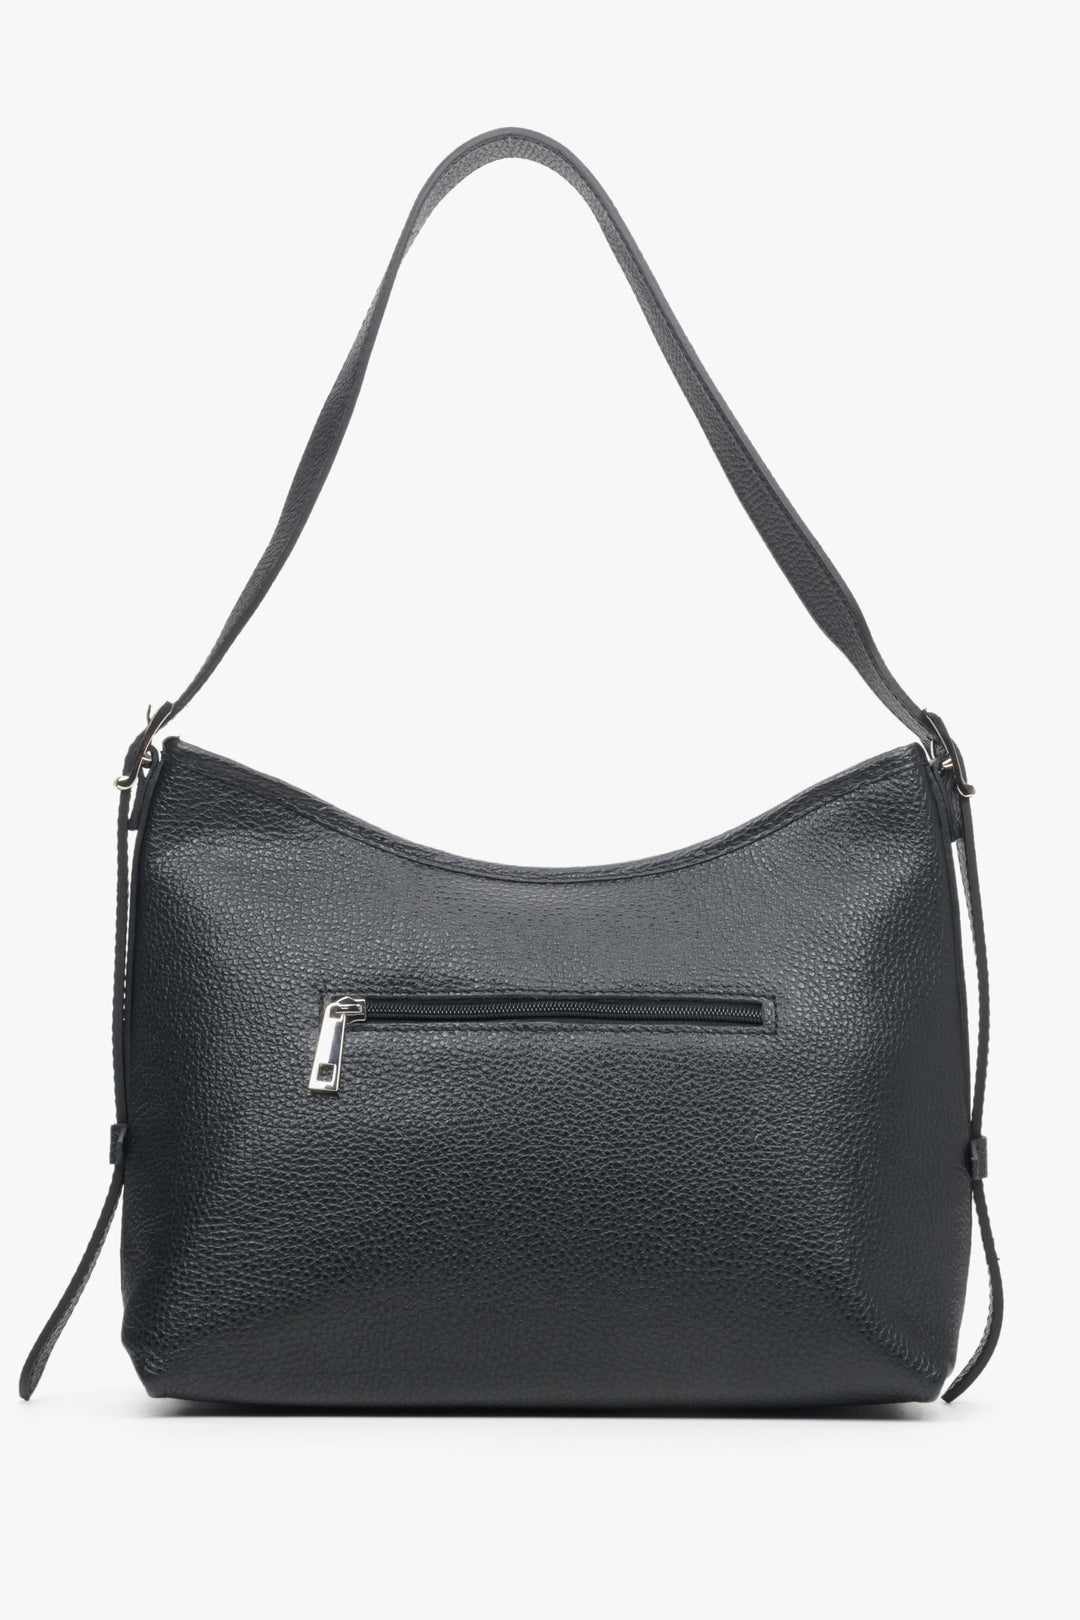 Women's black shoulder bag made of genuine leather by Estro - reverse side.